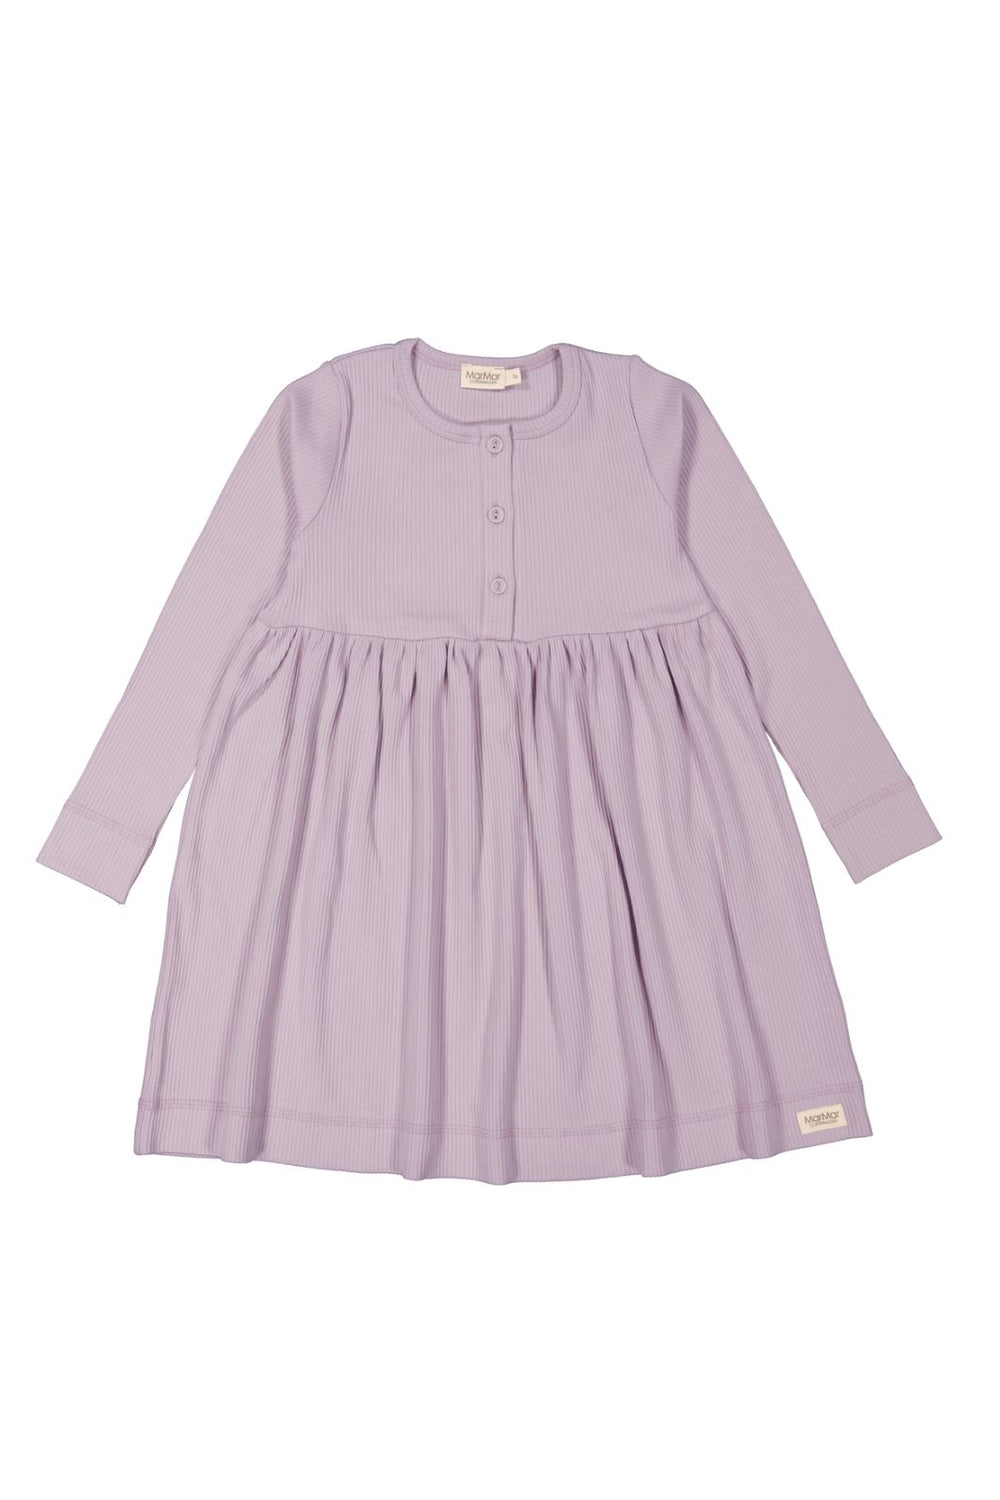 MarMar - Dress Dima - Lilac Bloom 0437 Kjoler 